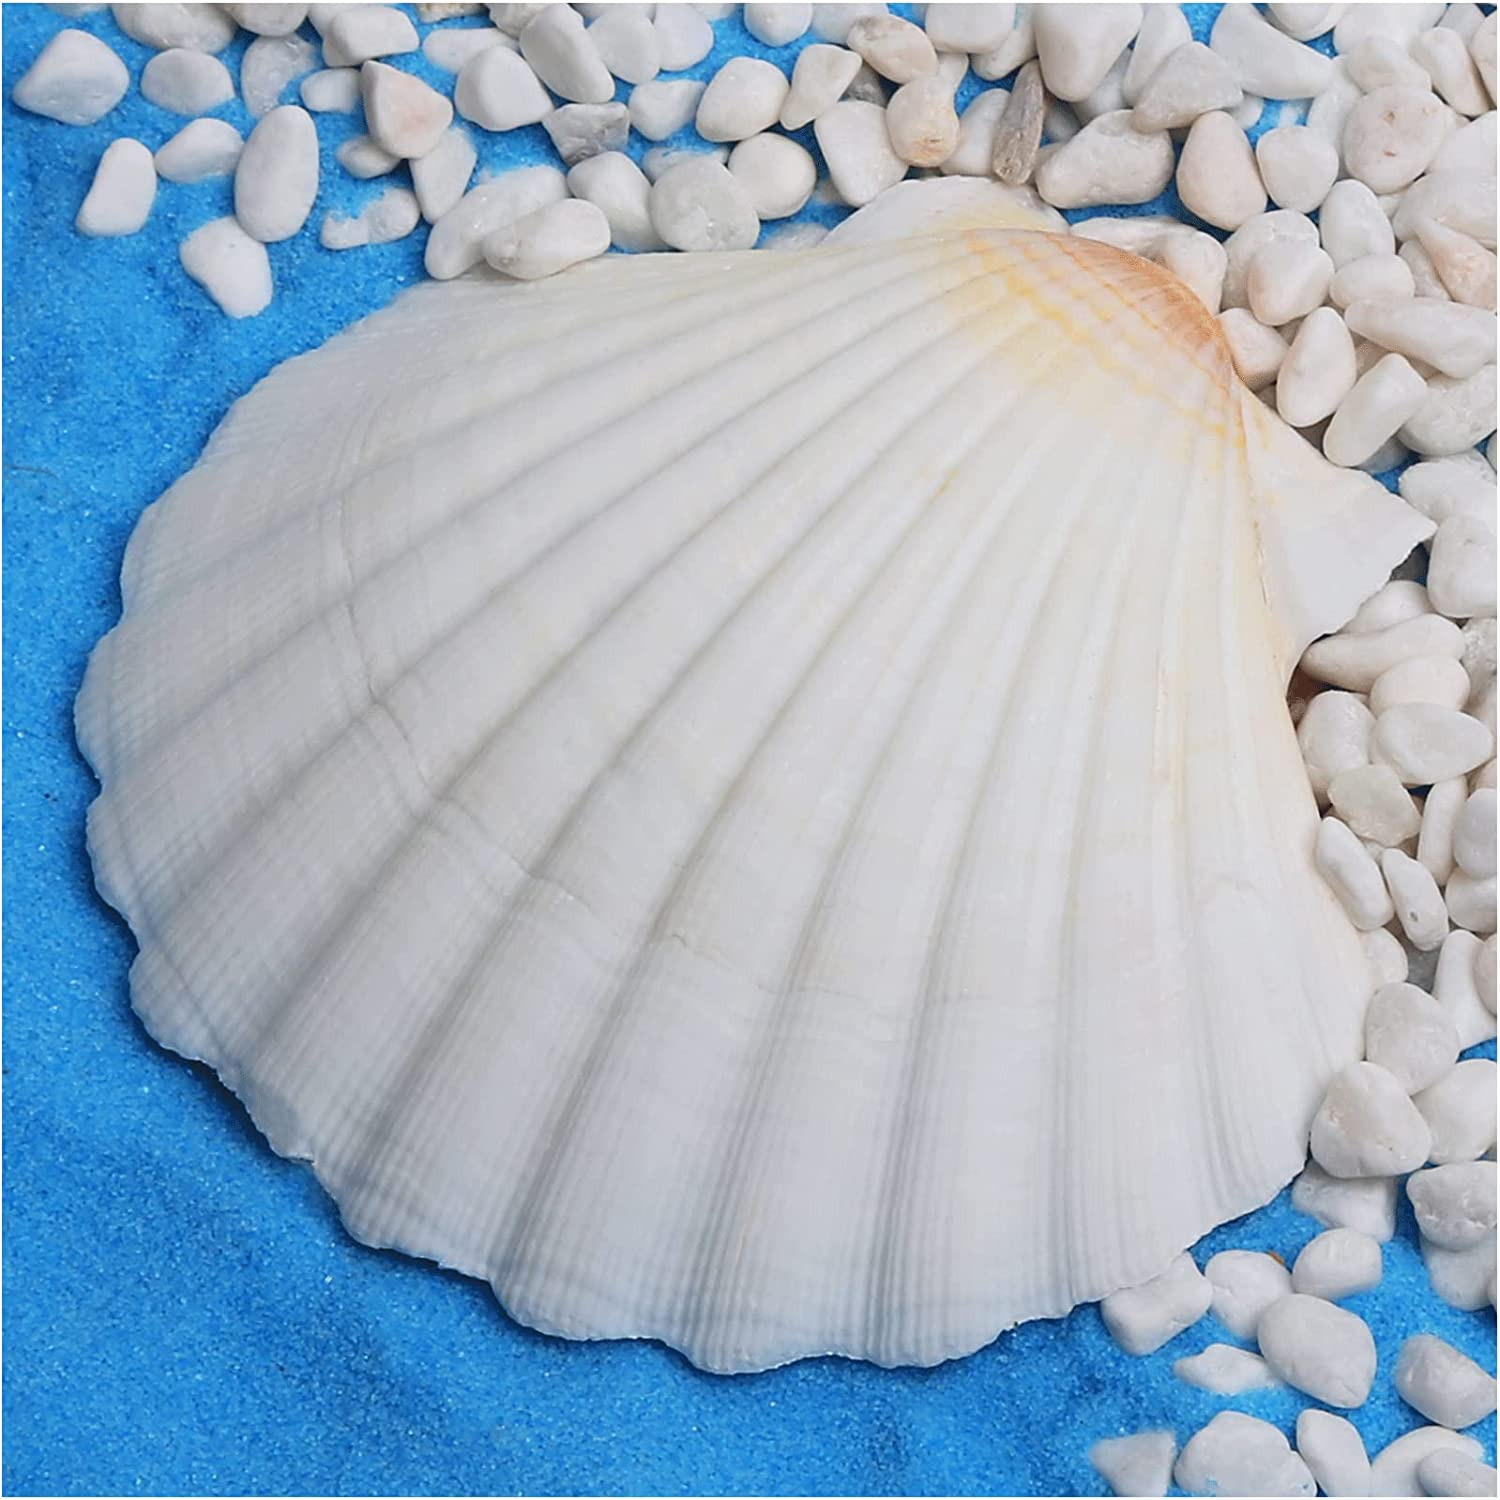 6Pcs 4-5Inch Scallop Shells, Natural Large Scallop, Sea Shells for Crafting, Sea